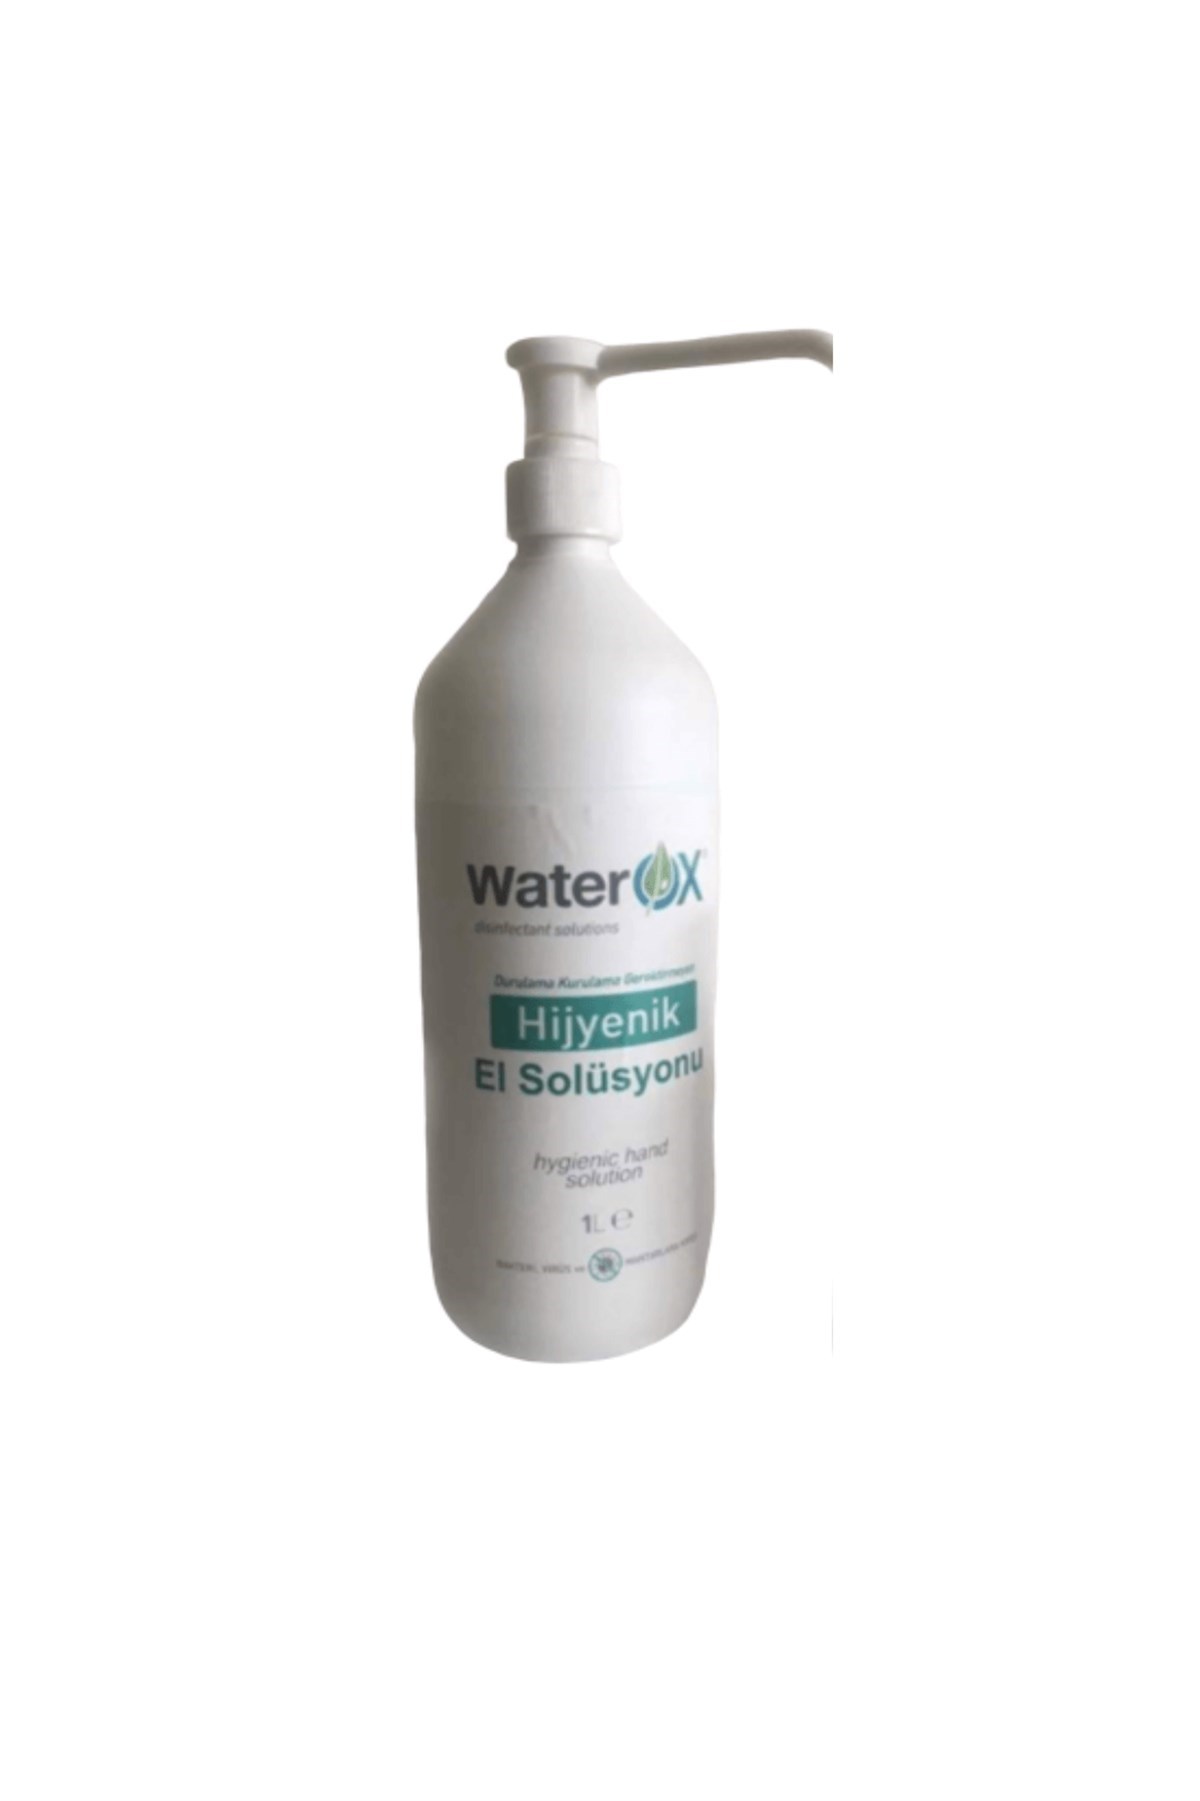 El Dezenfektanı WaterOx El Solüsyonu 1 Lt & El Dezenfektan Fiyatları